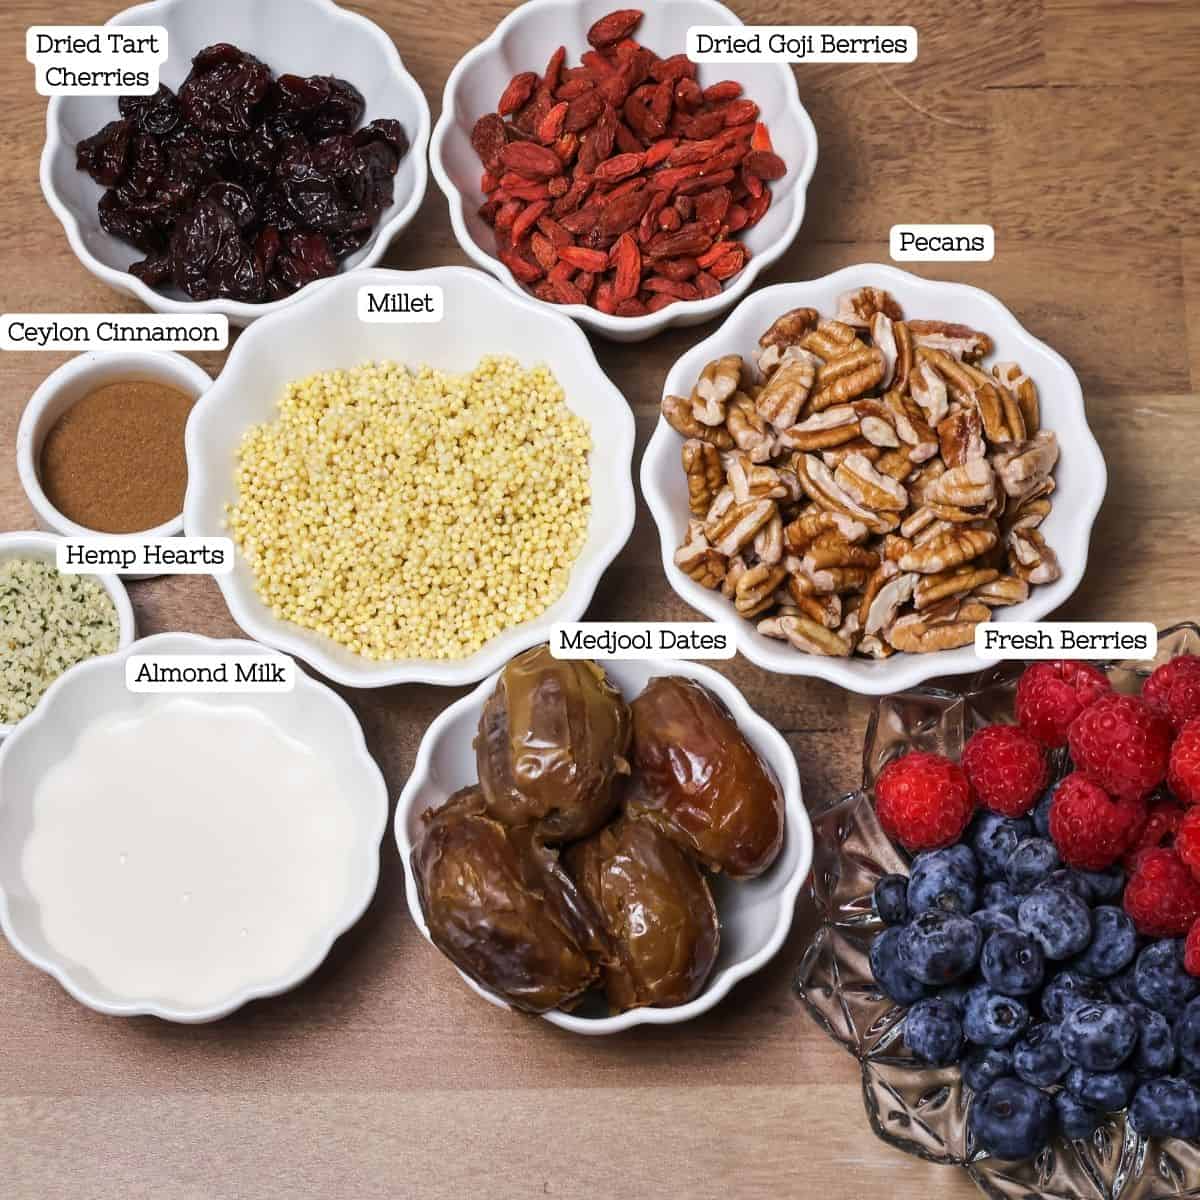 Various ingredients neatly arranged in individual bowls on a wooden surface, including millet, Medjool dates, pecans, goji berries, dried tart cherries, Ceylon cinnamon, hemp hearts, almond milk, and fresh berries.